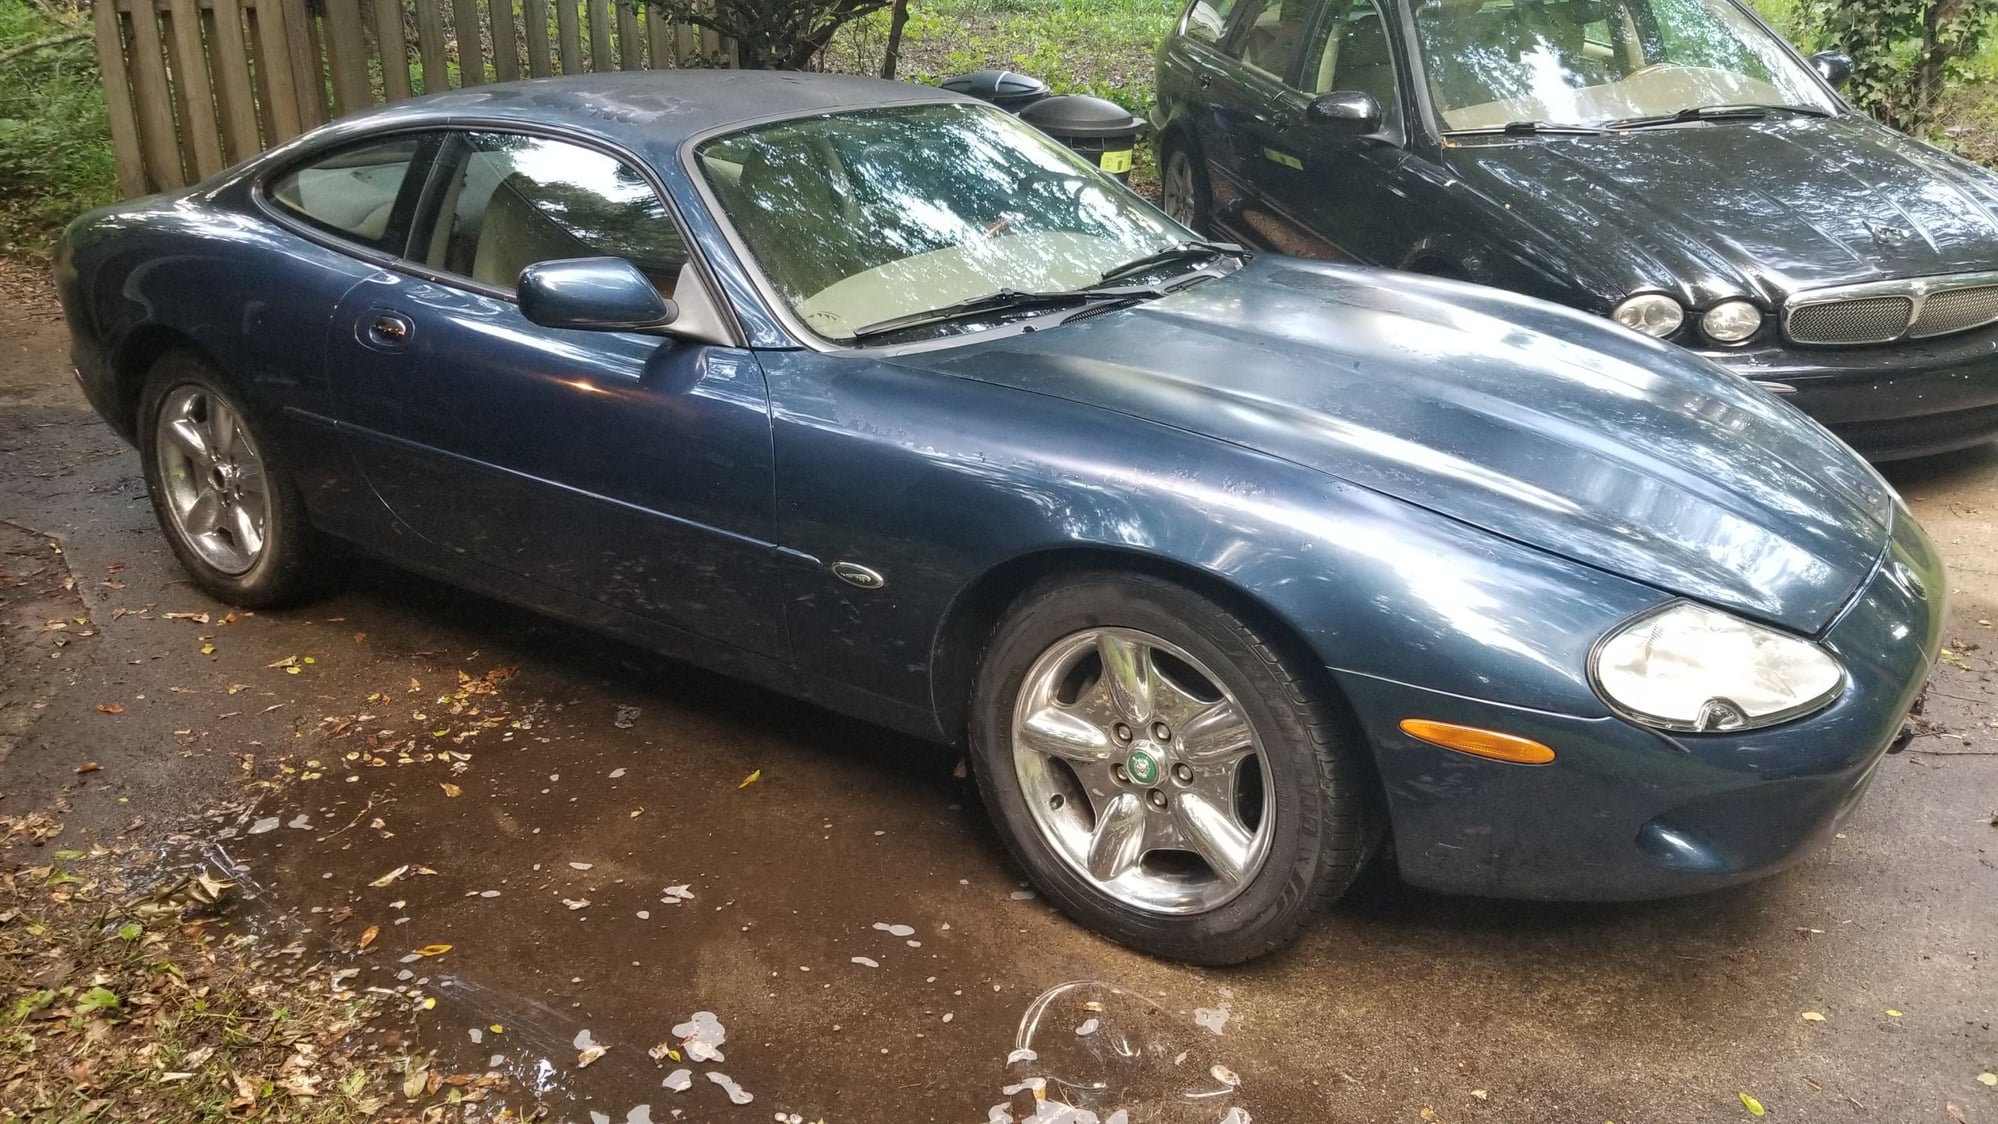 1997 Jaguar XK8 - 97 - 06 XK8 / XKR Left Right Front Fenders - Exterior Body Parts - $75 - Atlanta, GA 30339, United States